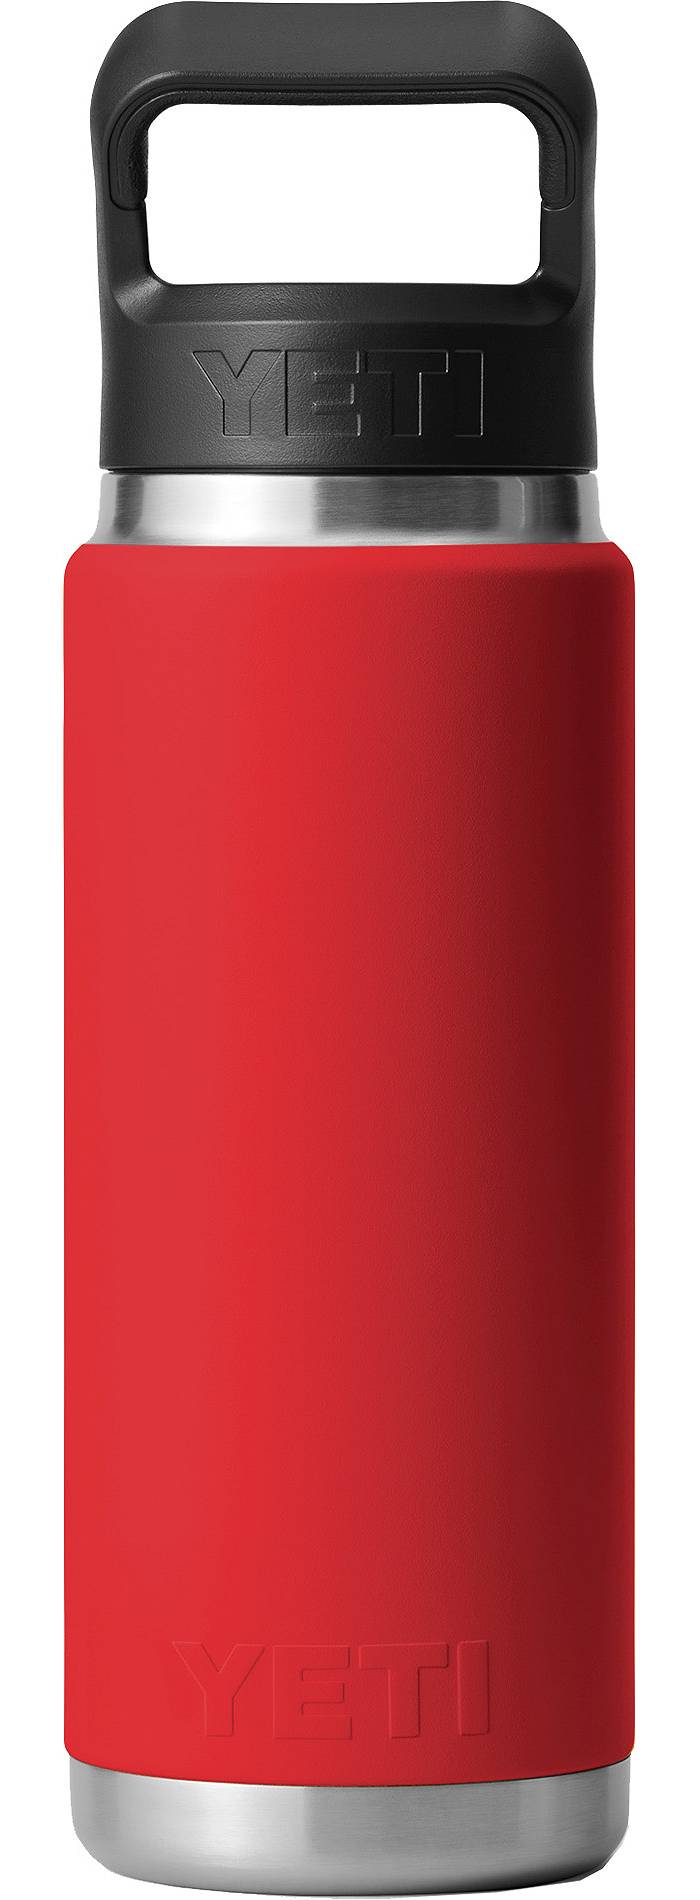 Yeti Rambler 26 oz Straw Bottle - Rescue Red